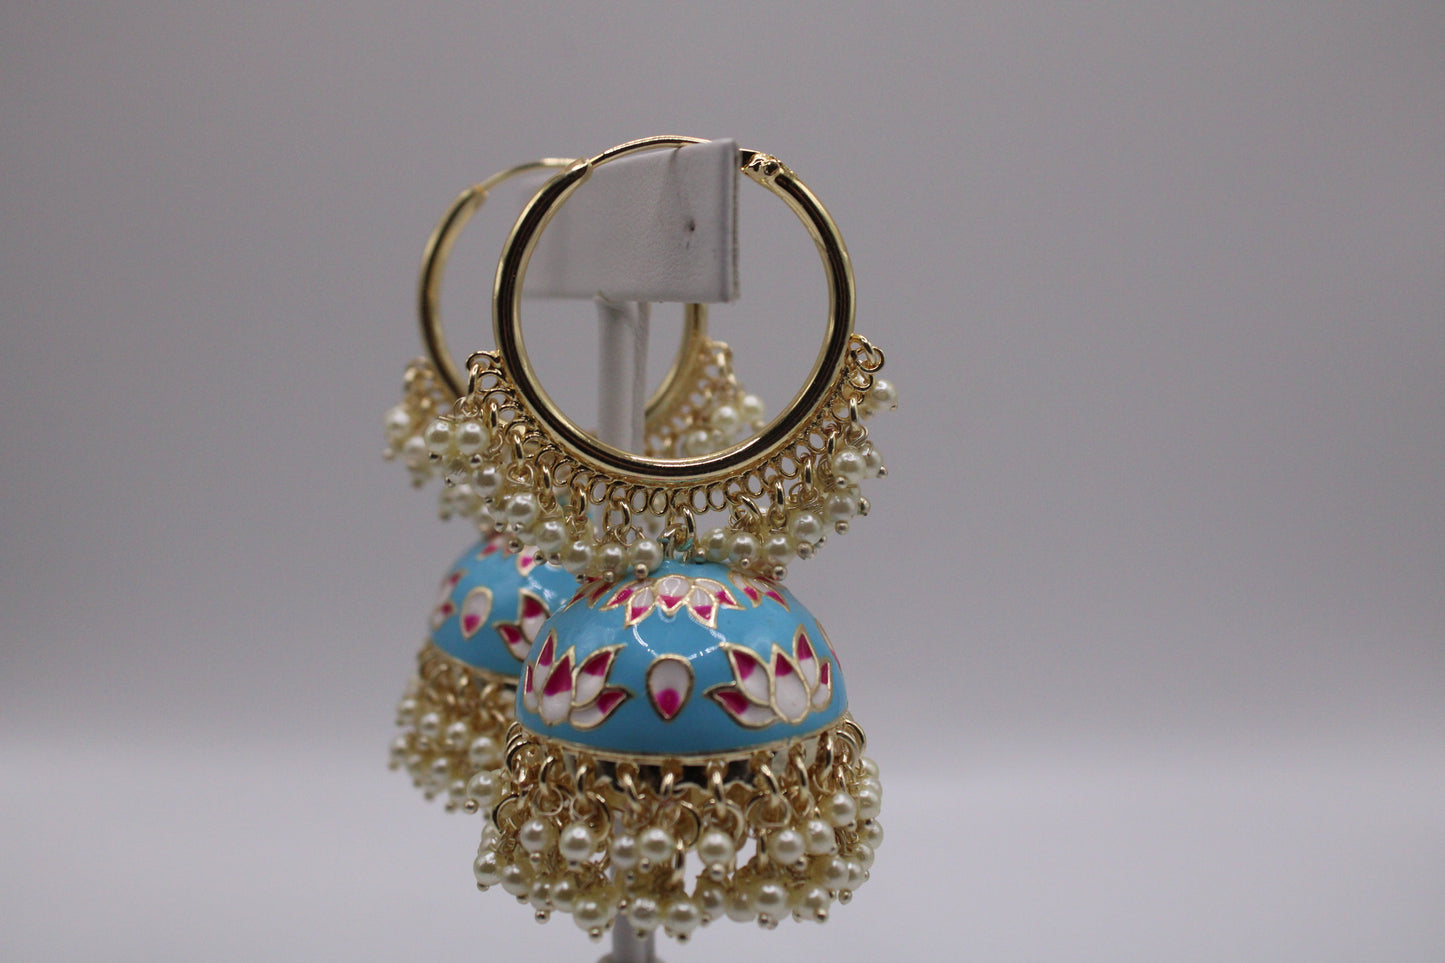 Madhuri earrings